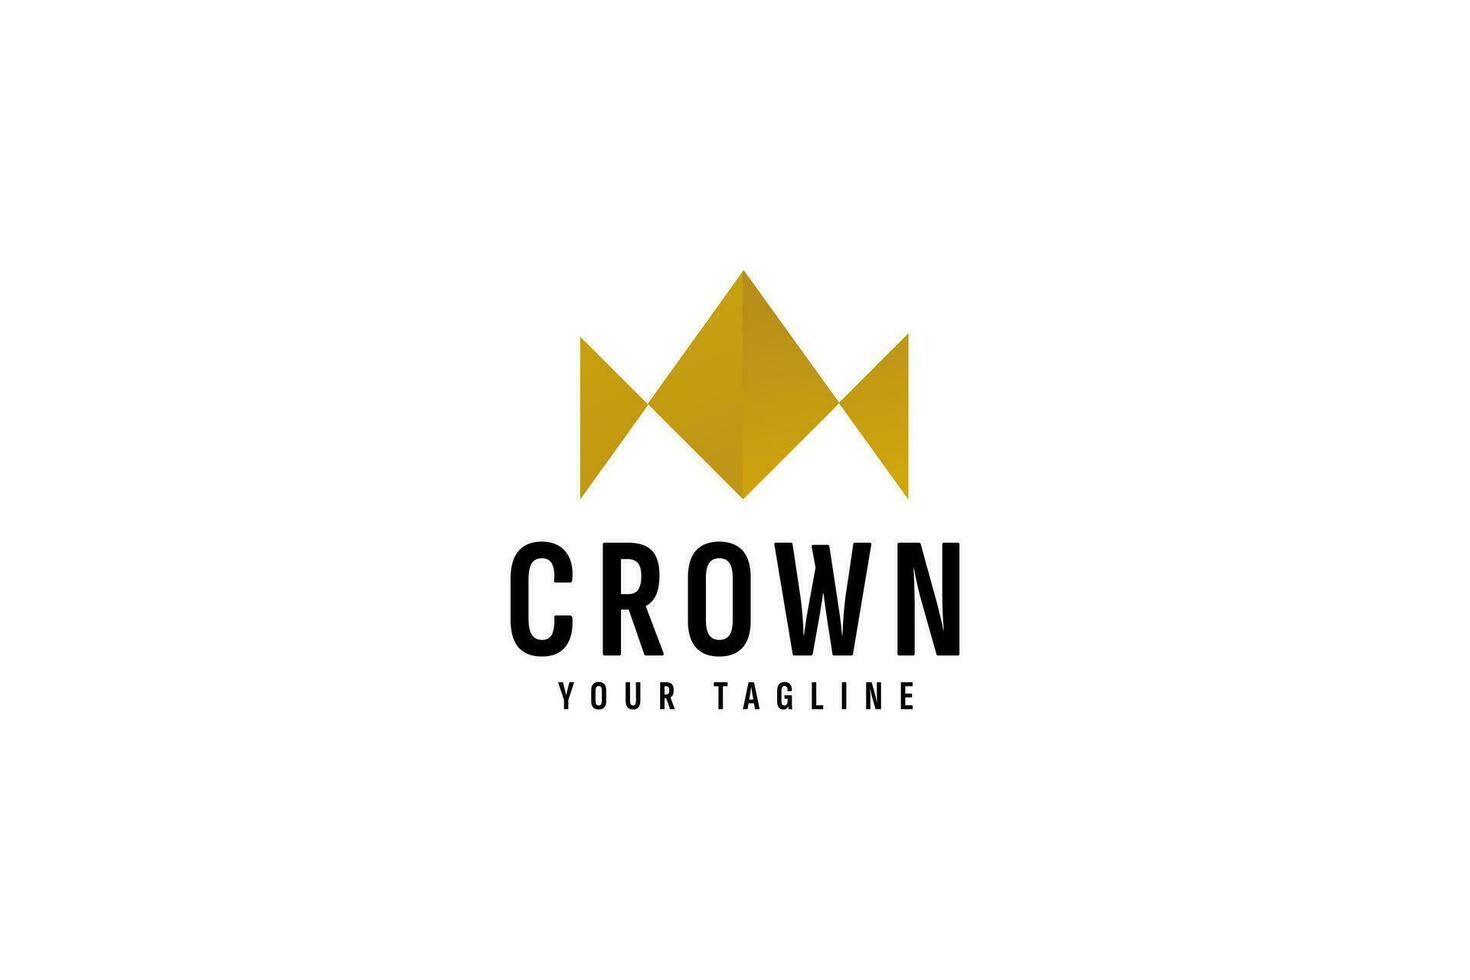 Crown logo vector icon illustration